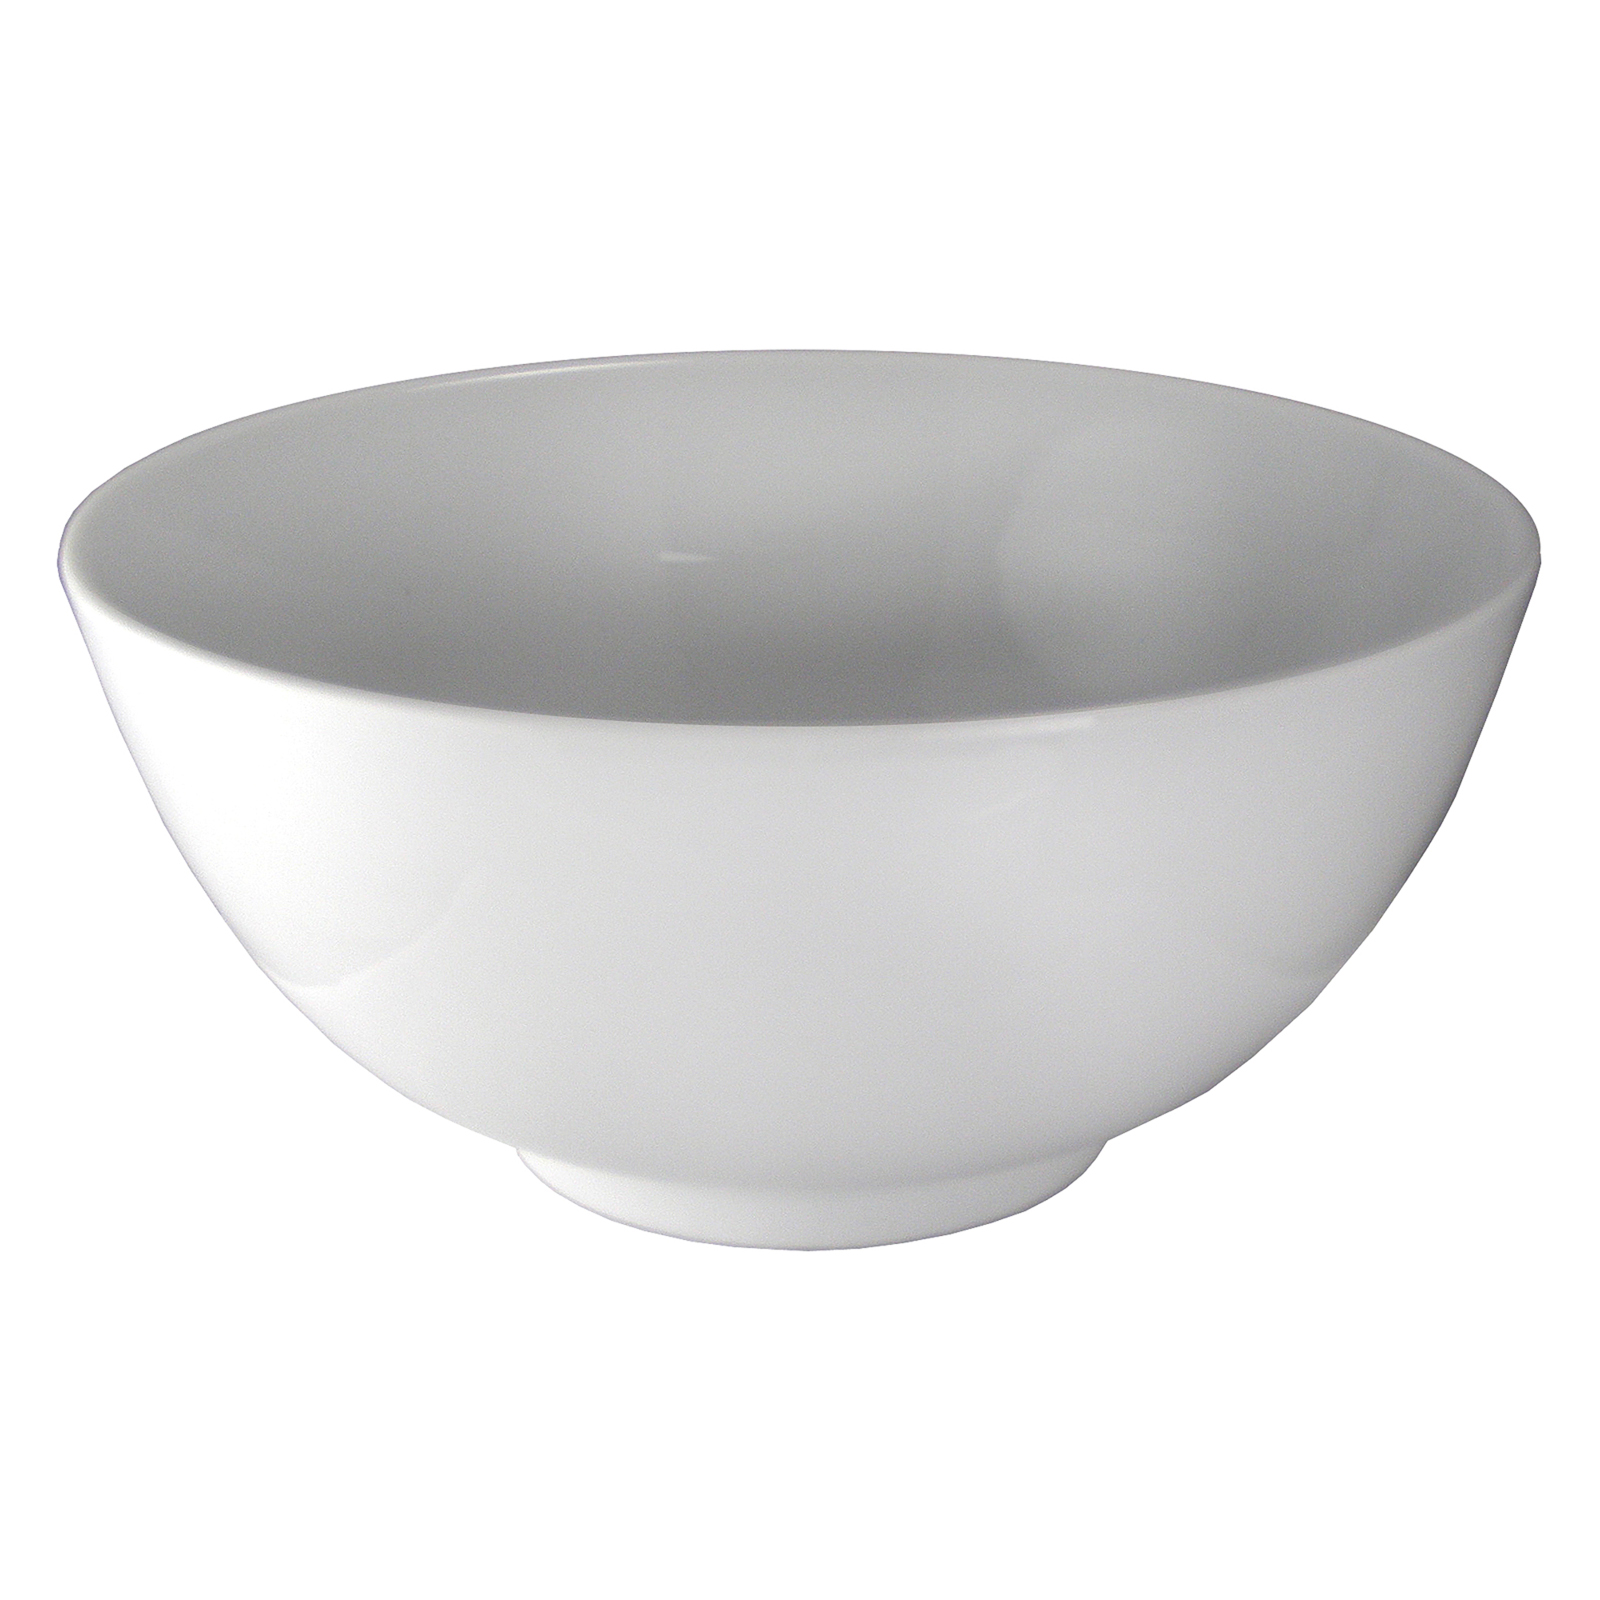 12 inch serving bowl